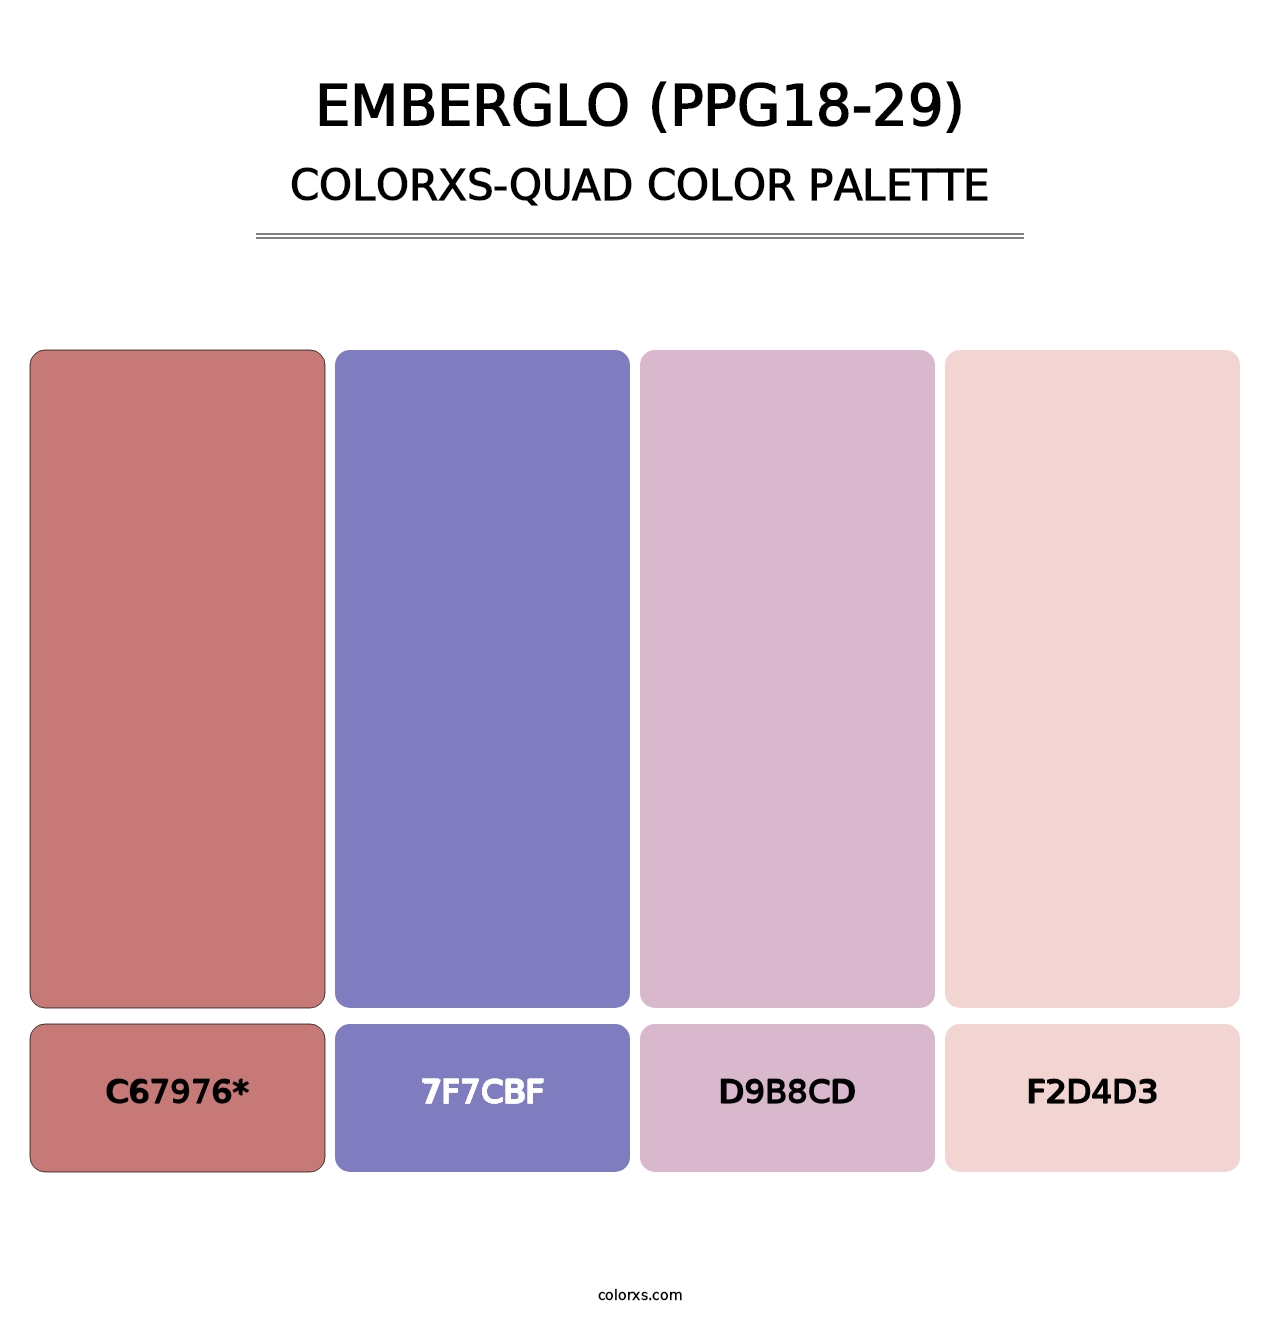 Emberglo (PPG18-29) - Colorxs Quad Palette